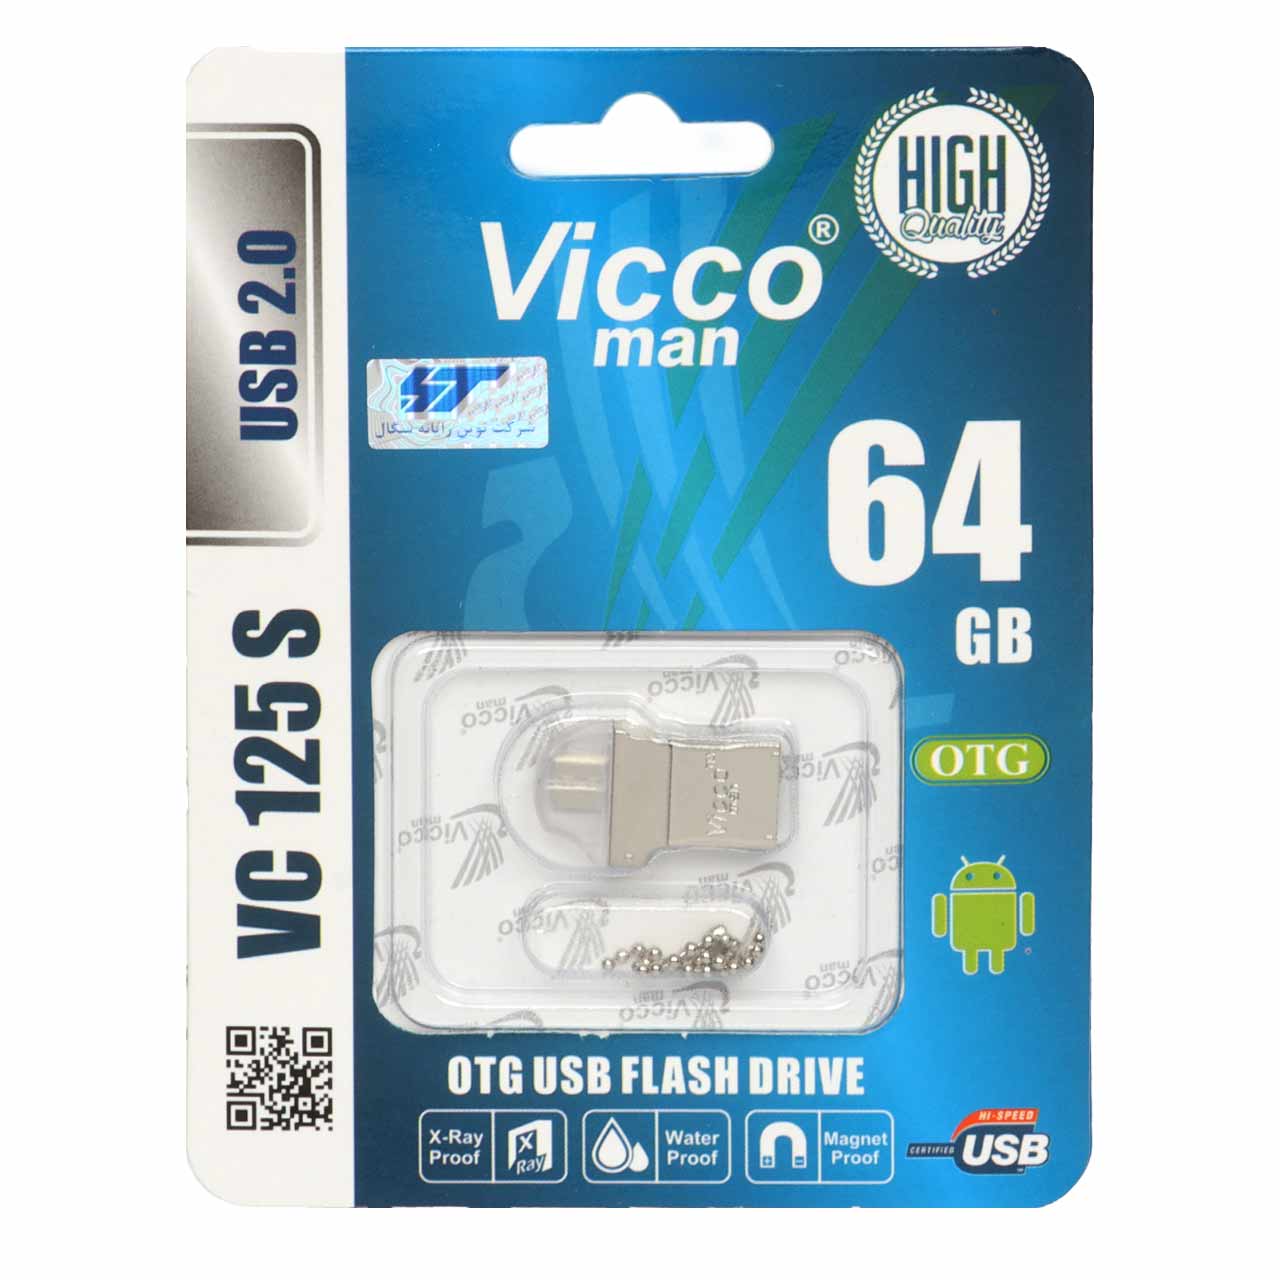 نقره ای Vicco VC125 S USB2.0 OTG Flash Memory-64GB